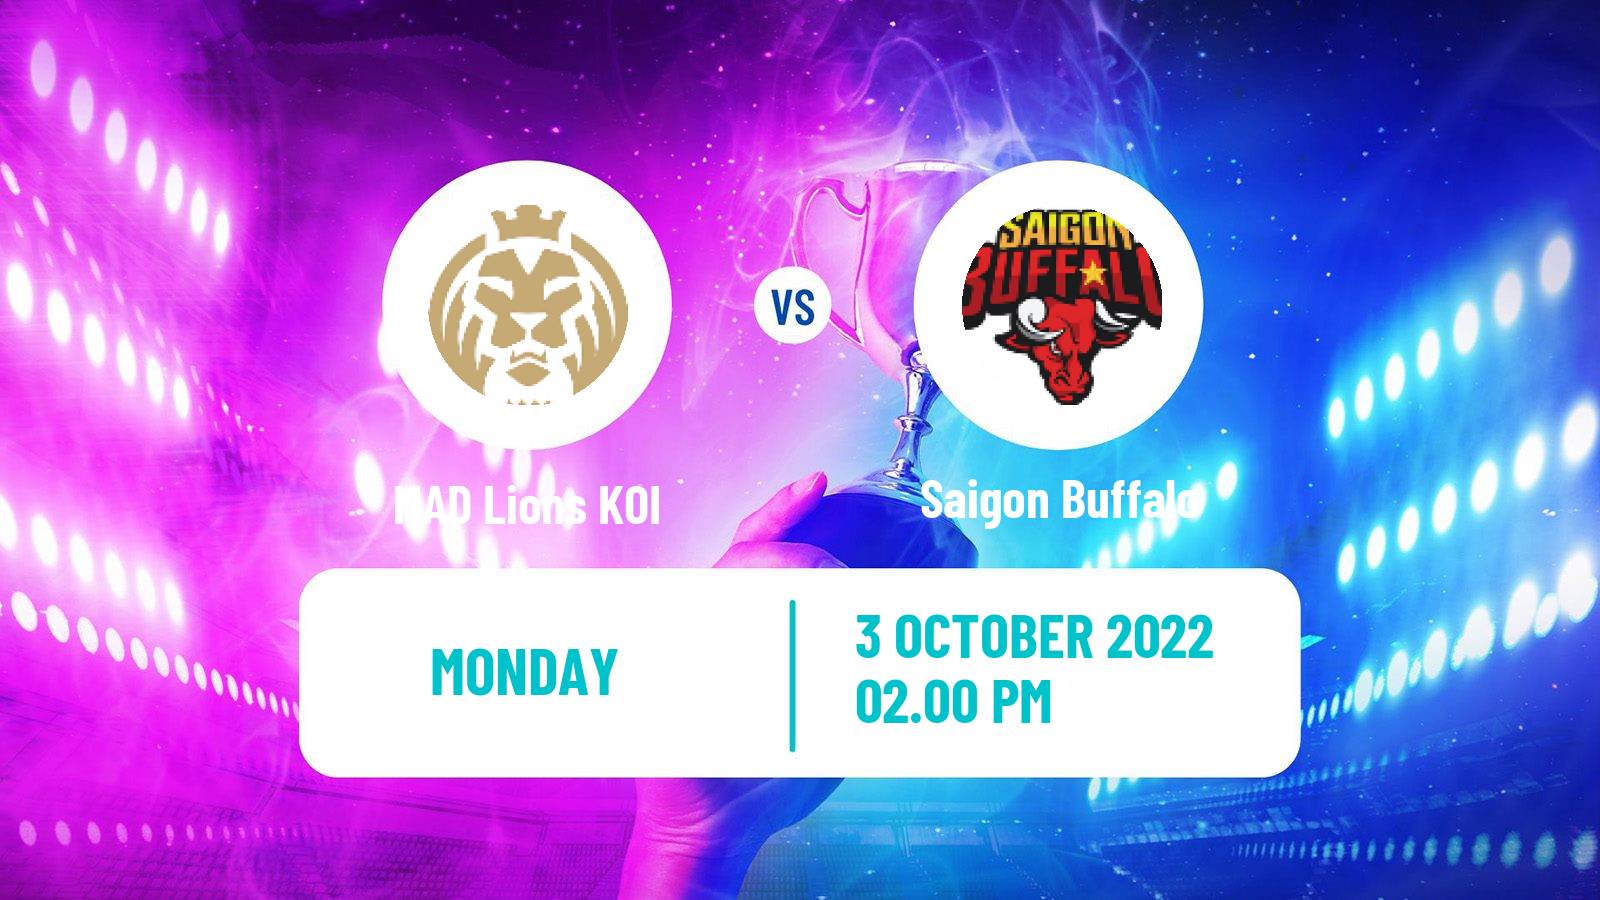 Esports eSports MAD Lions KOI - Saigon Buffalo